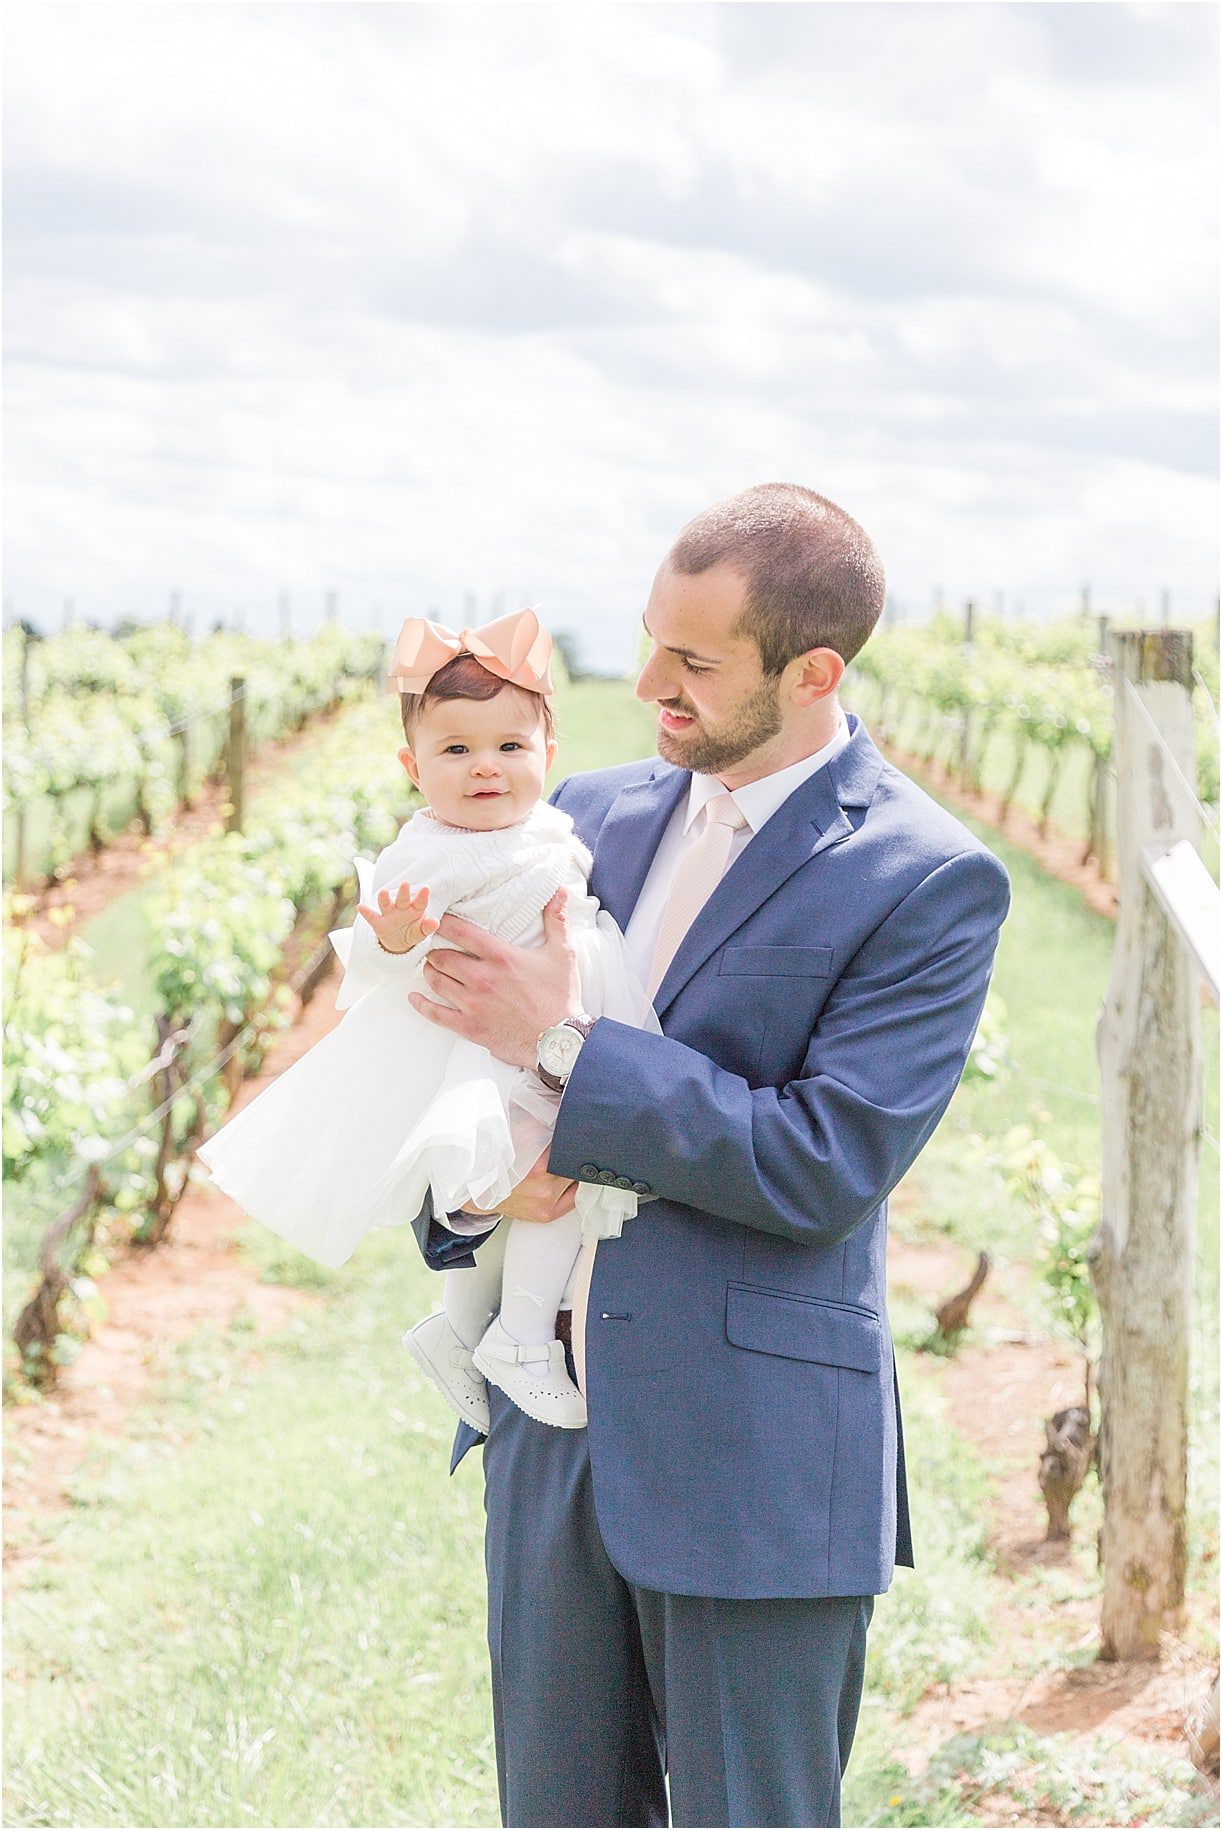 Spring Vineyard Wedding | Hill City Bride Virginia Wedding Blog - Jessica Green Photography - baby, groom, flower girl